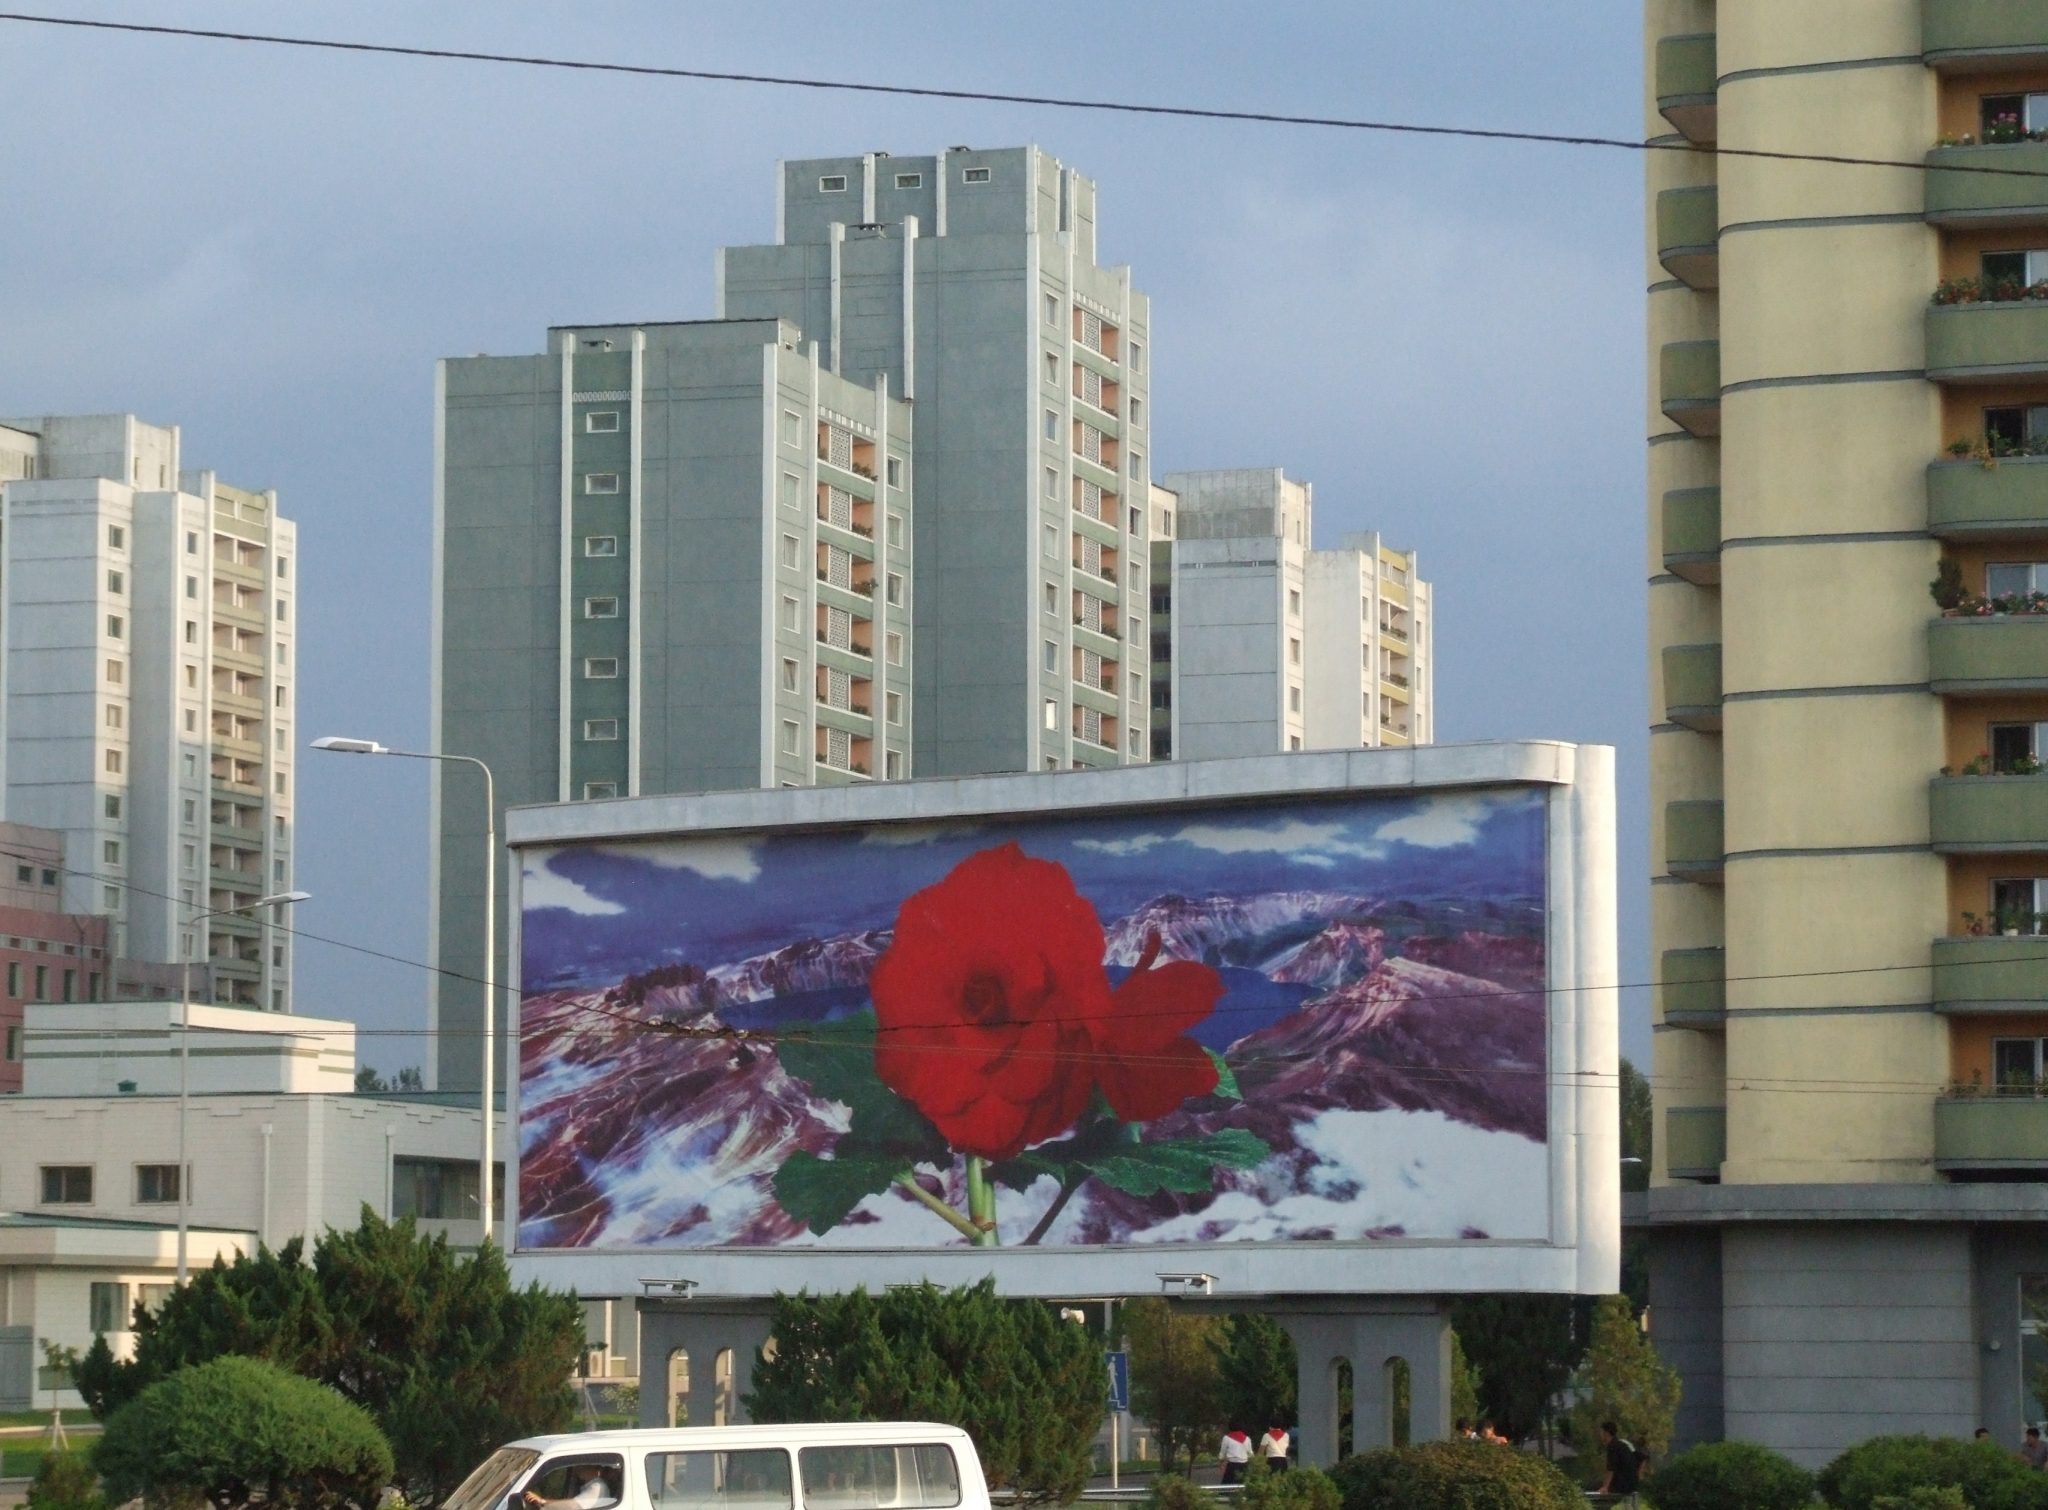 於平壤街頭海報（By Nicor, via Wikimedia Commons）